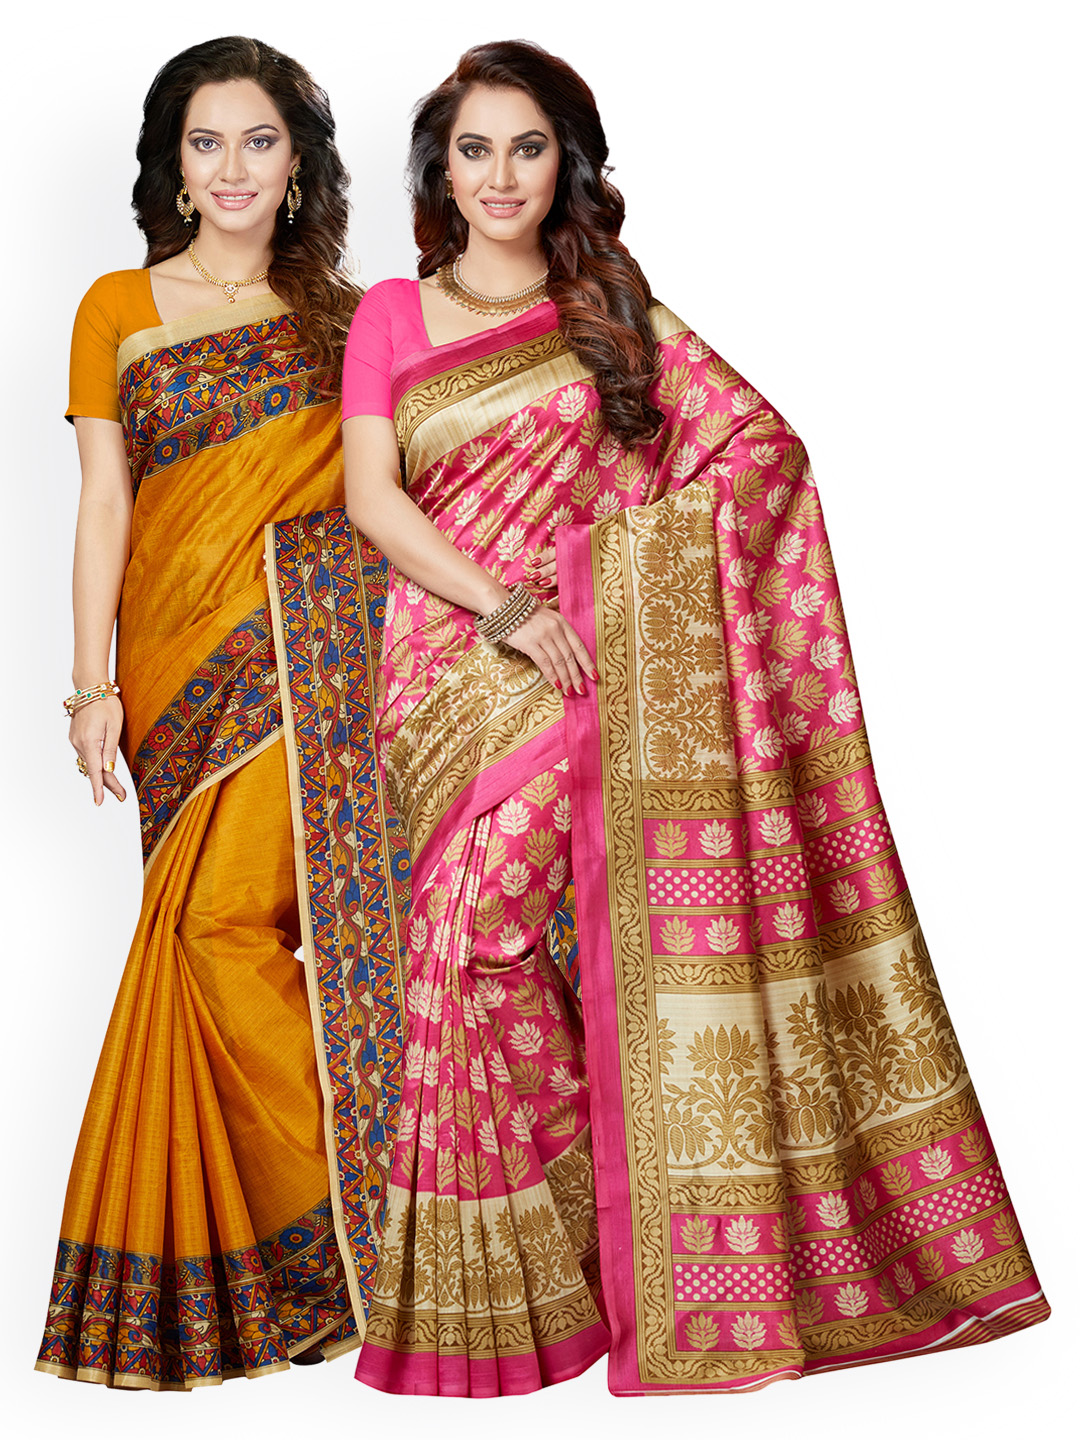 Ishin Selection of 2 Mustard Yellow & Pink Art Silk Printed Sarees Price in India